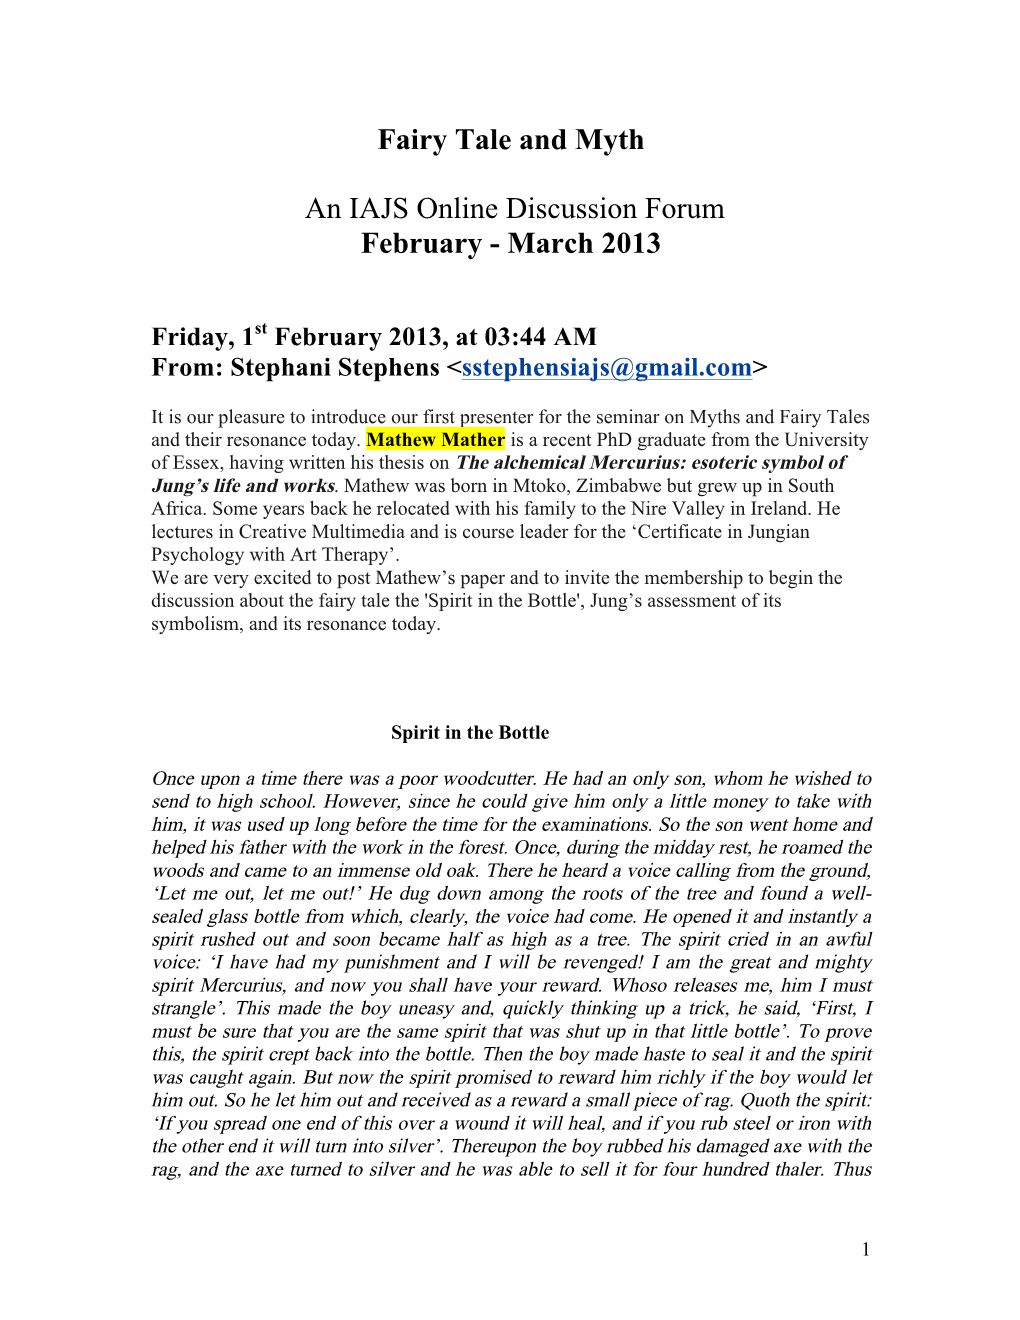 IAJS Myth and Fairy Tales On-Line Seminar Feb. 2013